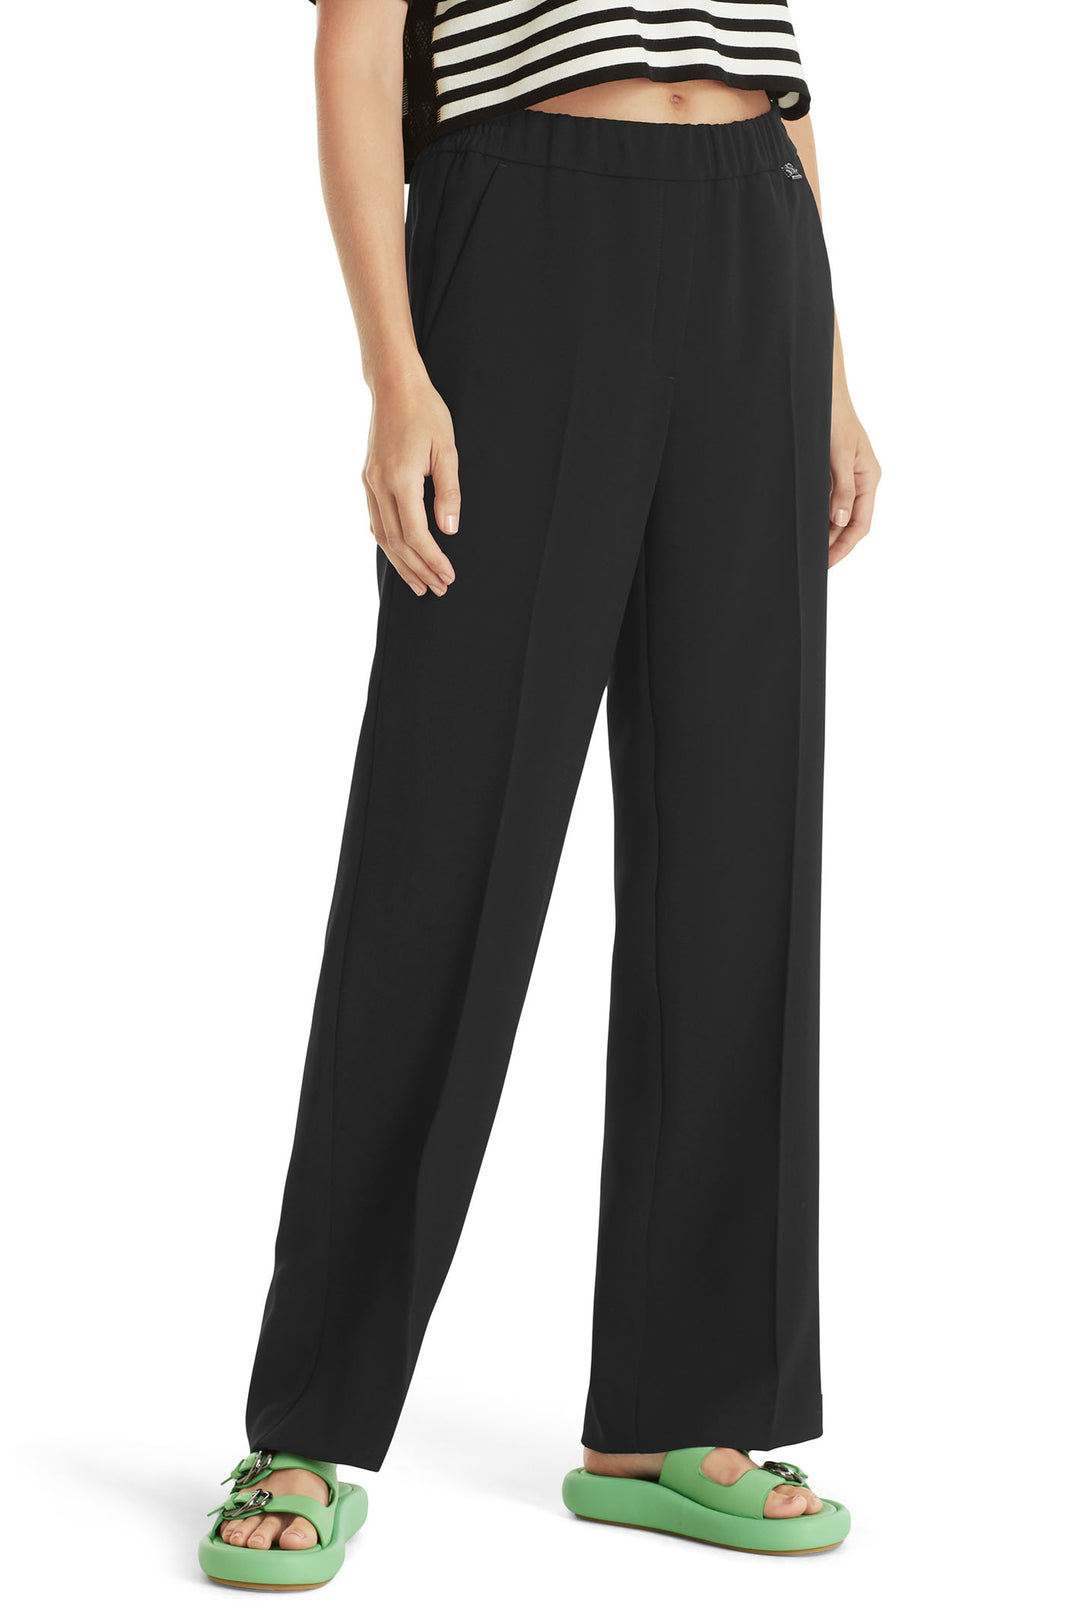 Marc Cain WP 81.15 W65 900 Black Washington Wide Fit Trousers - Olivia Grace Fashion